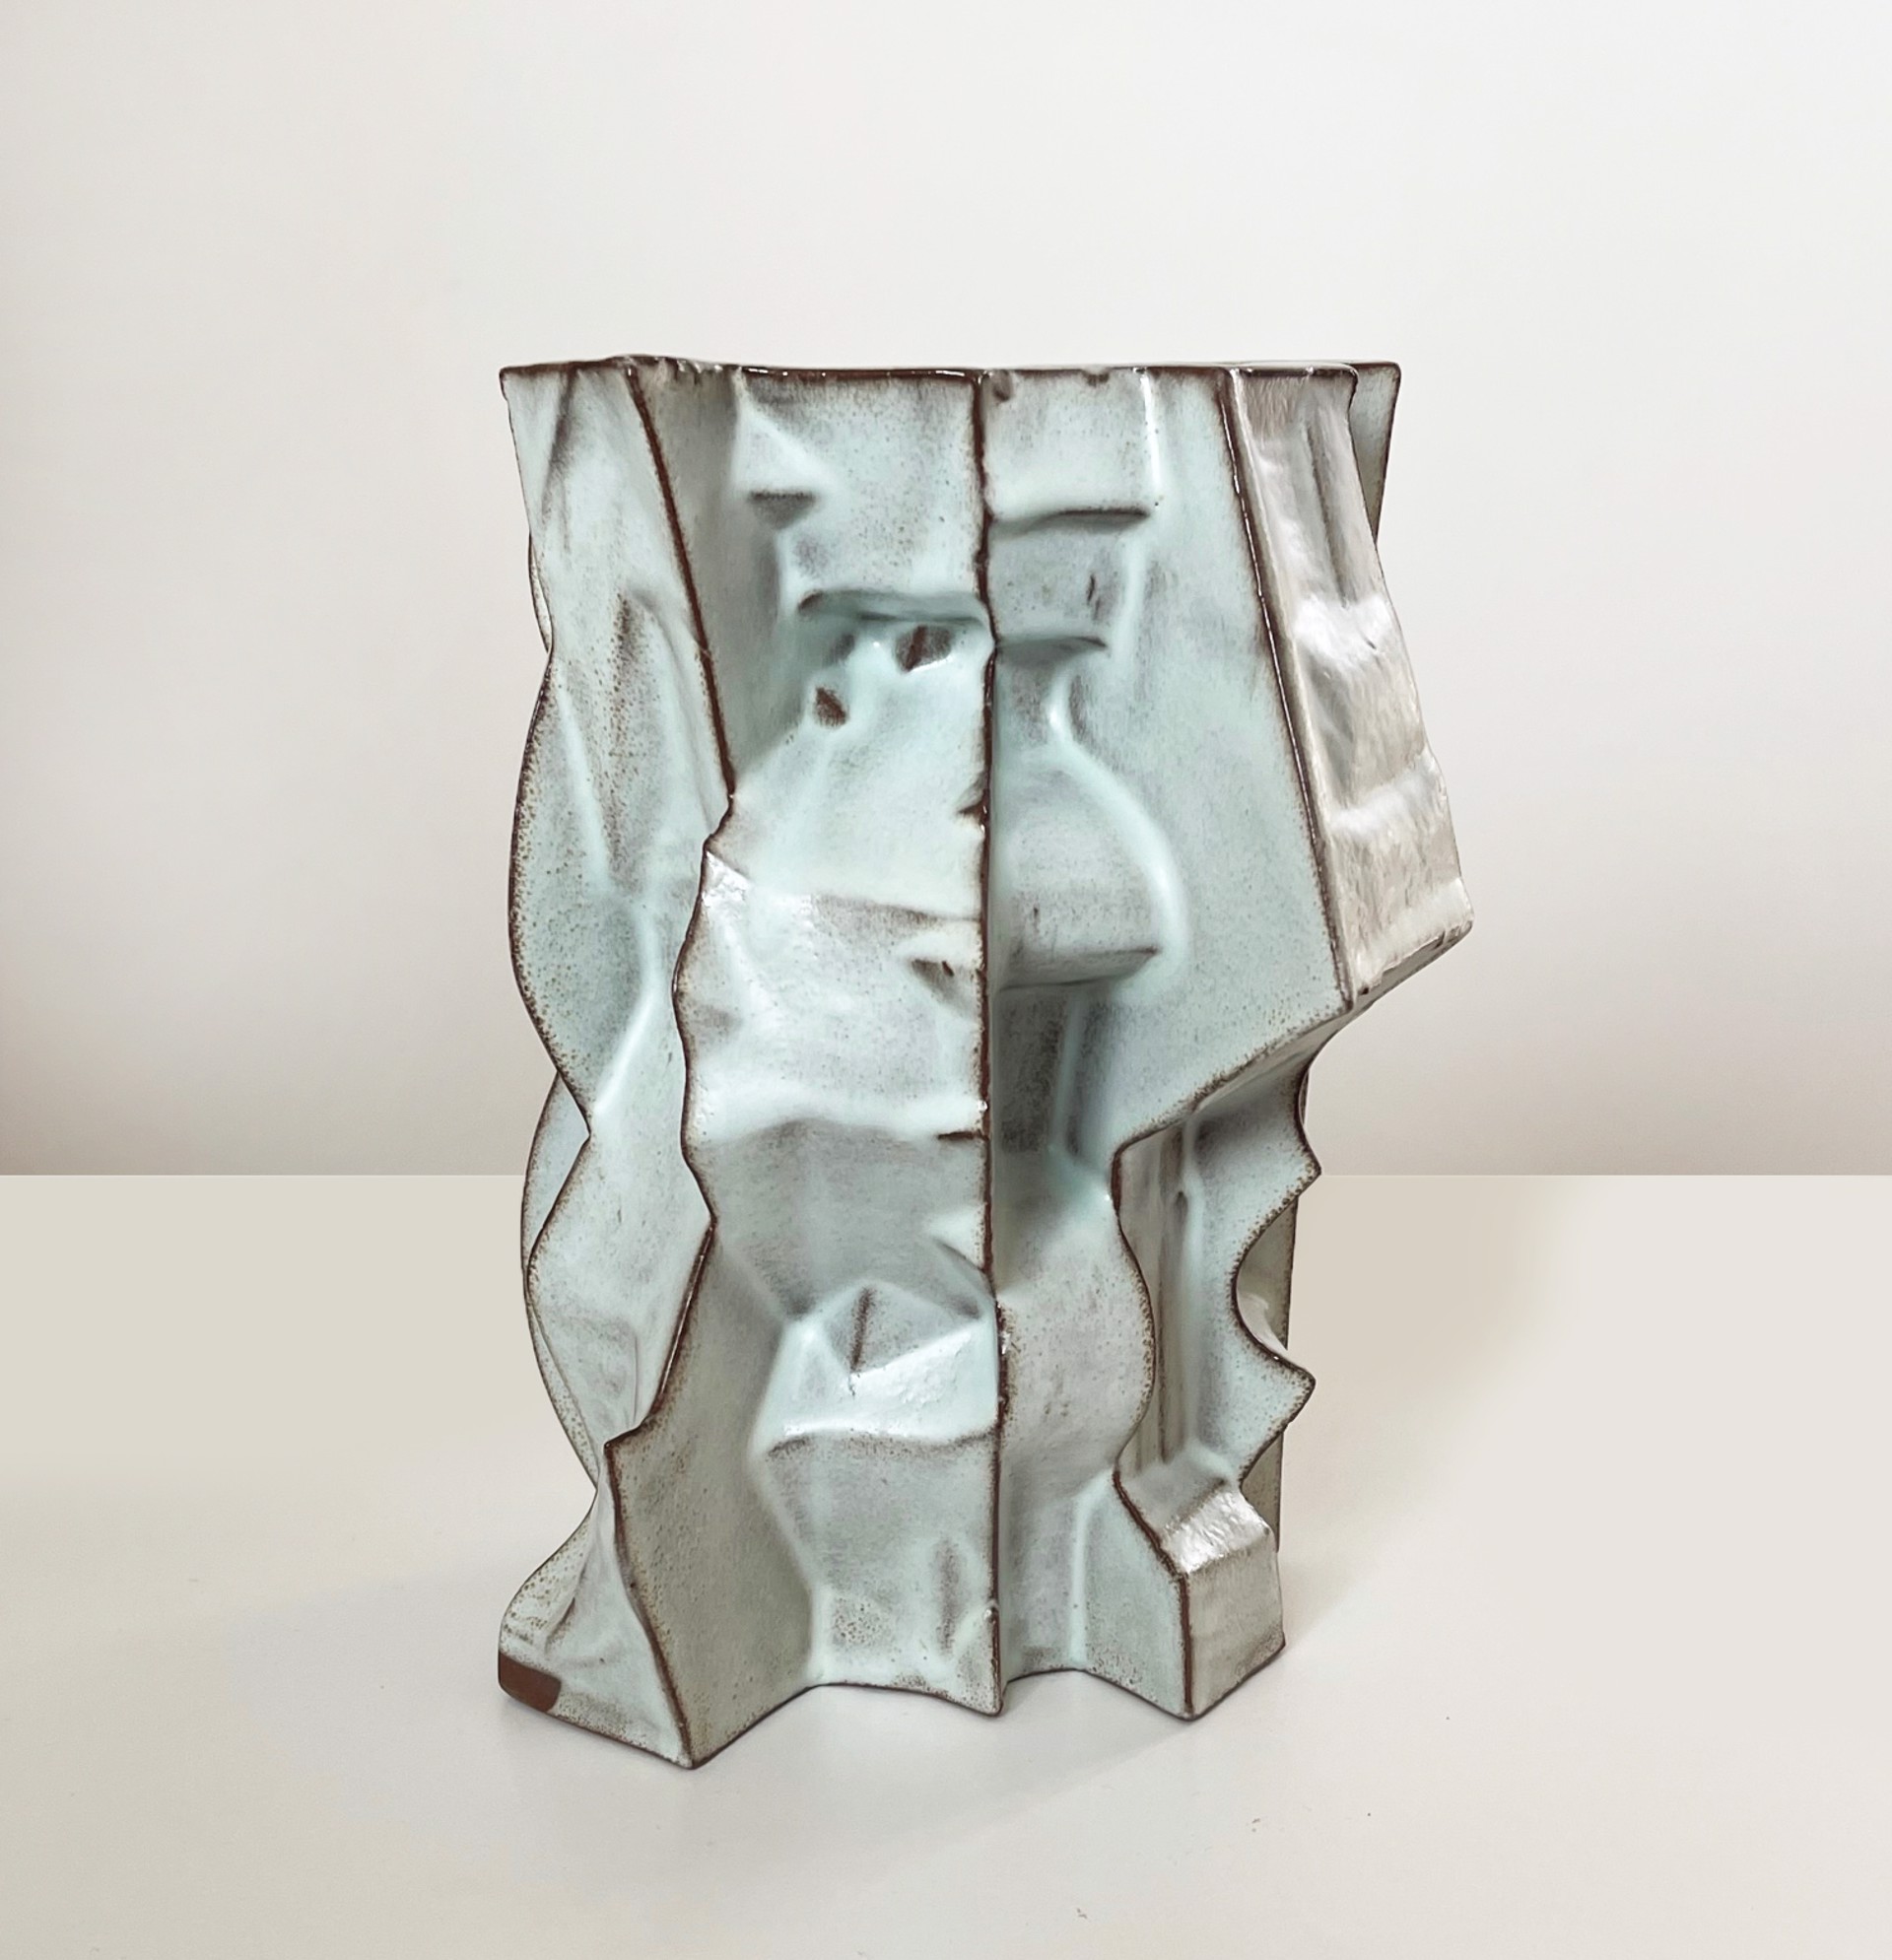 Wedge Vase by Ceramics Factory